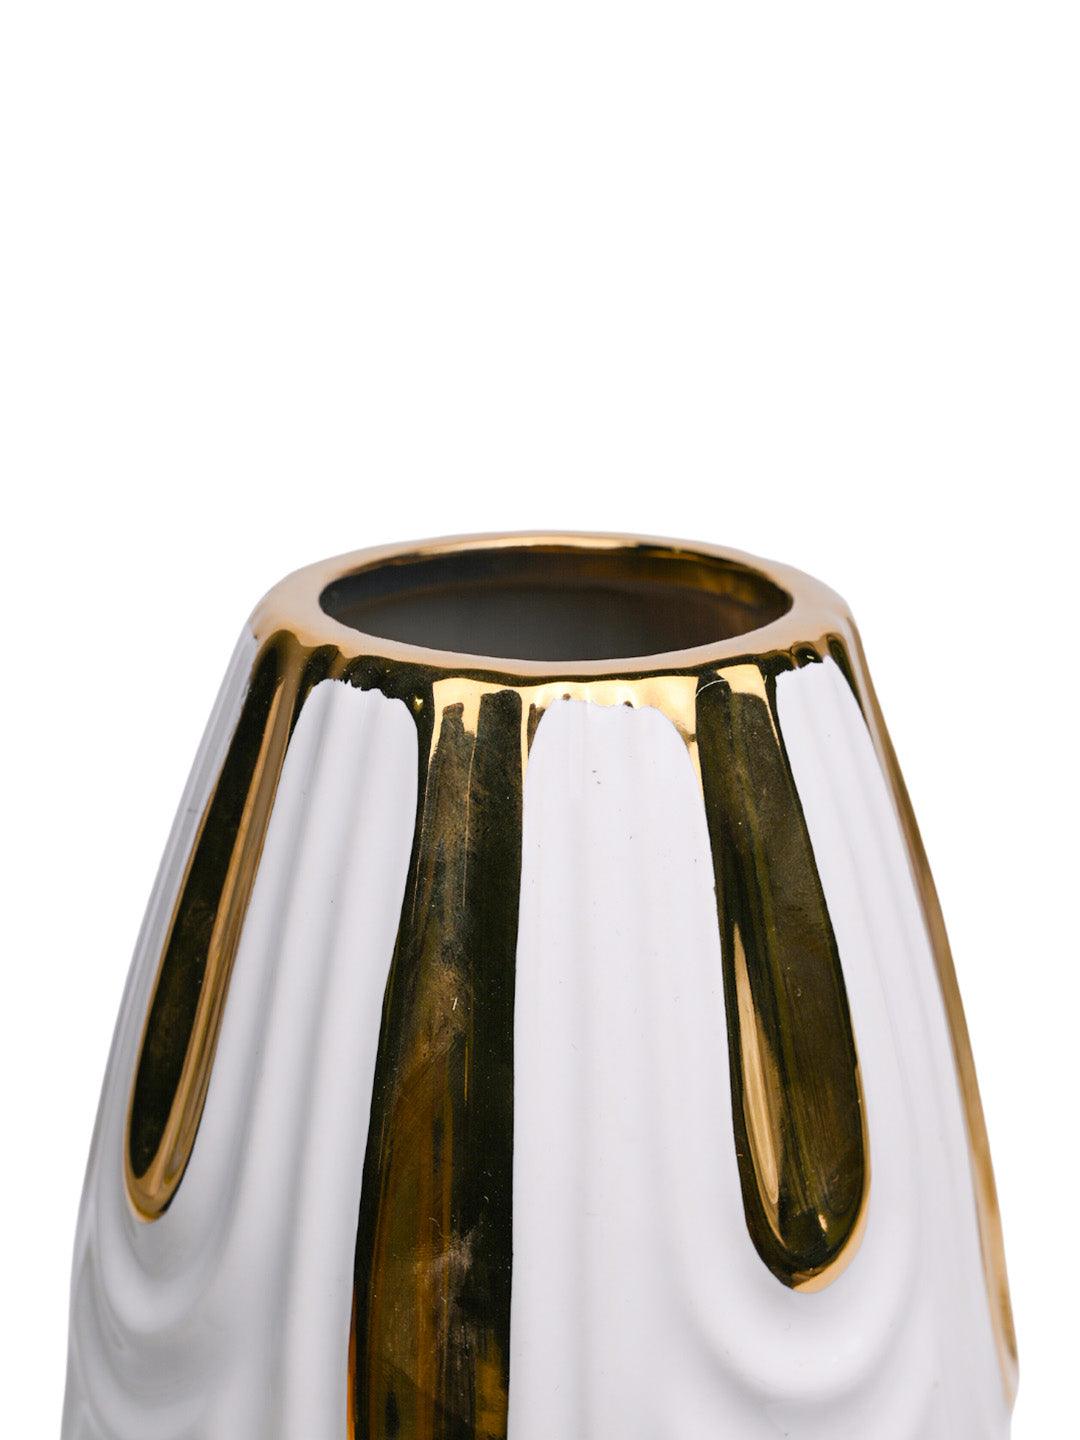 White Textured Vase with Gold Design - MARKET 99